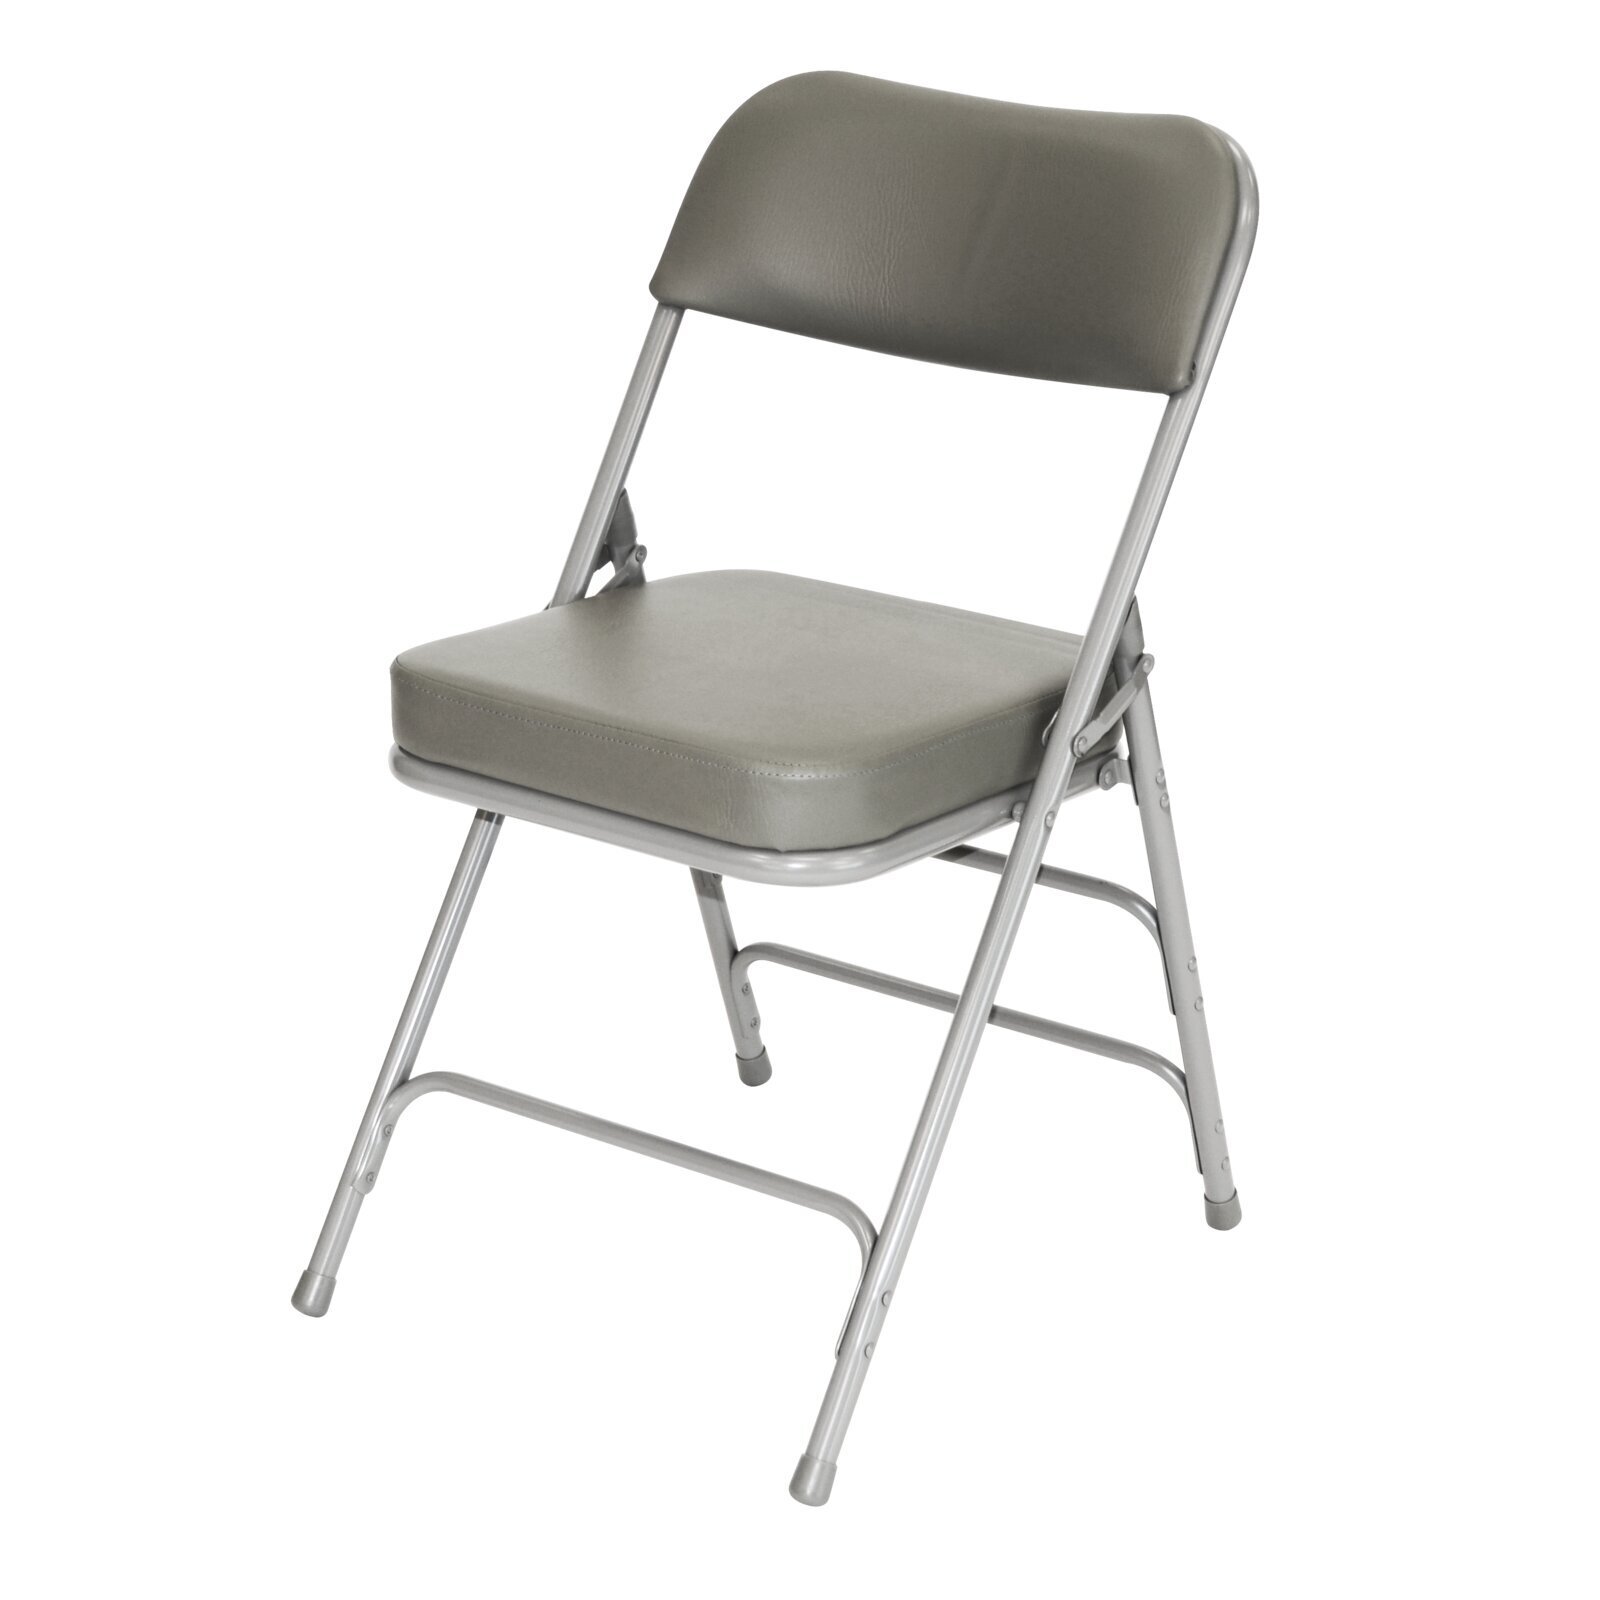 Metal Sturdy Folding Chairs